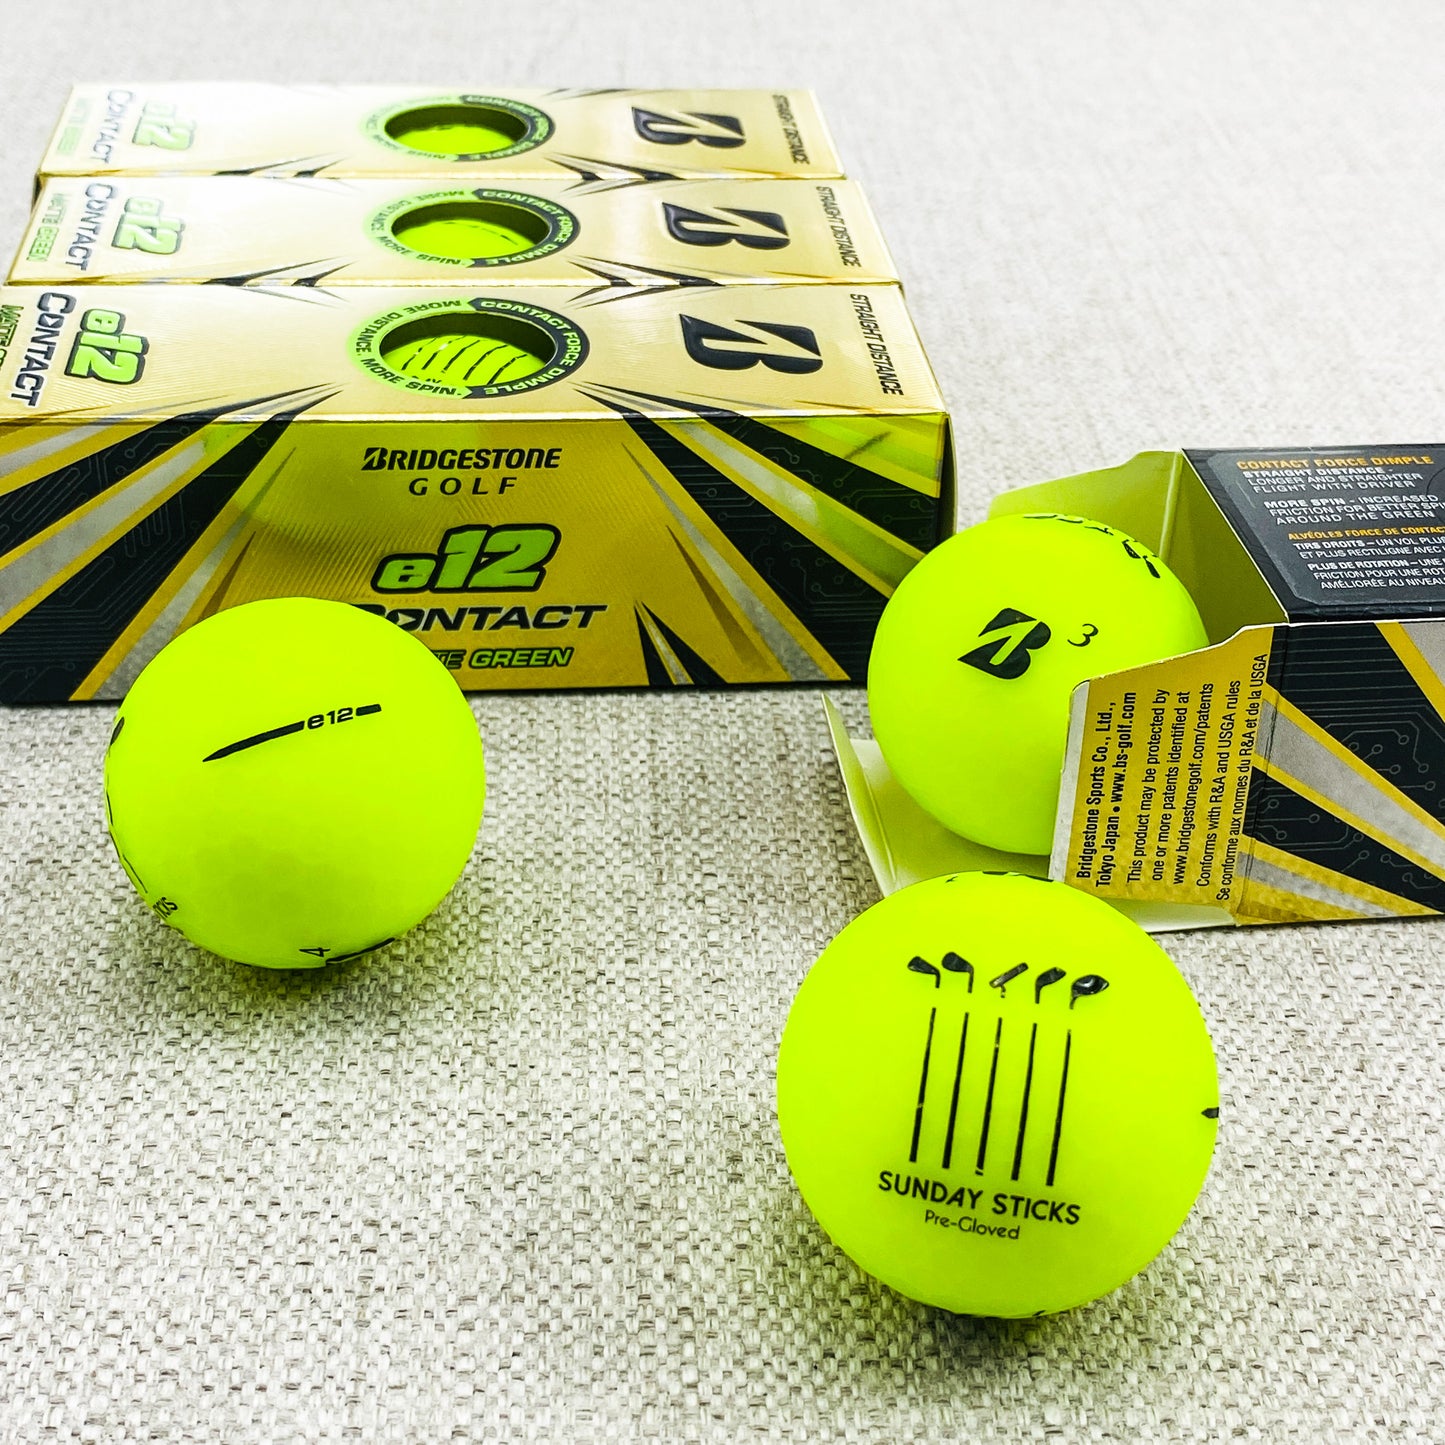 Bridgestone E12 Contact Golf Balls. Matte Green, 2 Dozen - Brand New